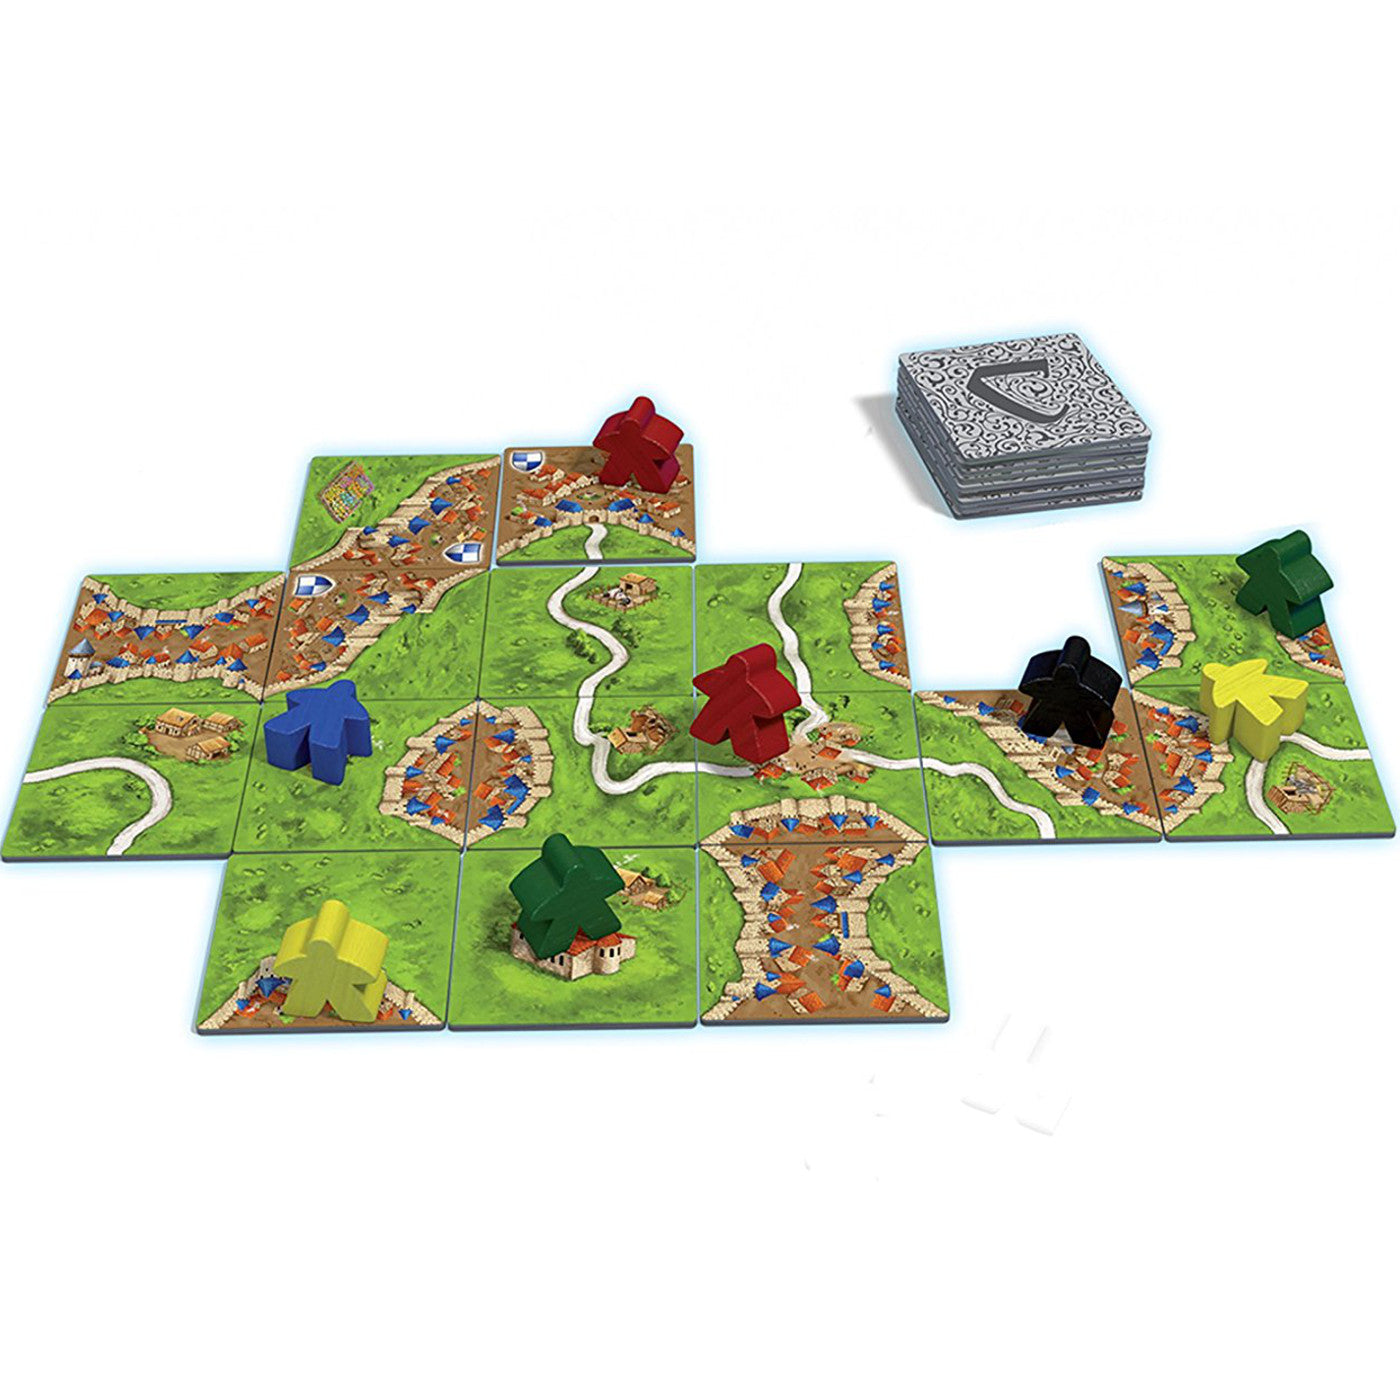 Carcassonne Game 3